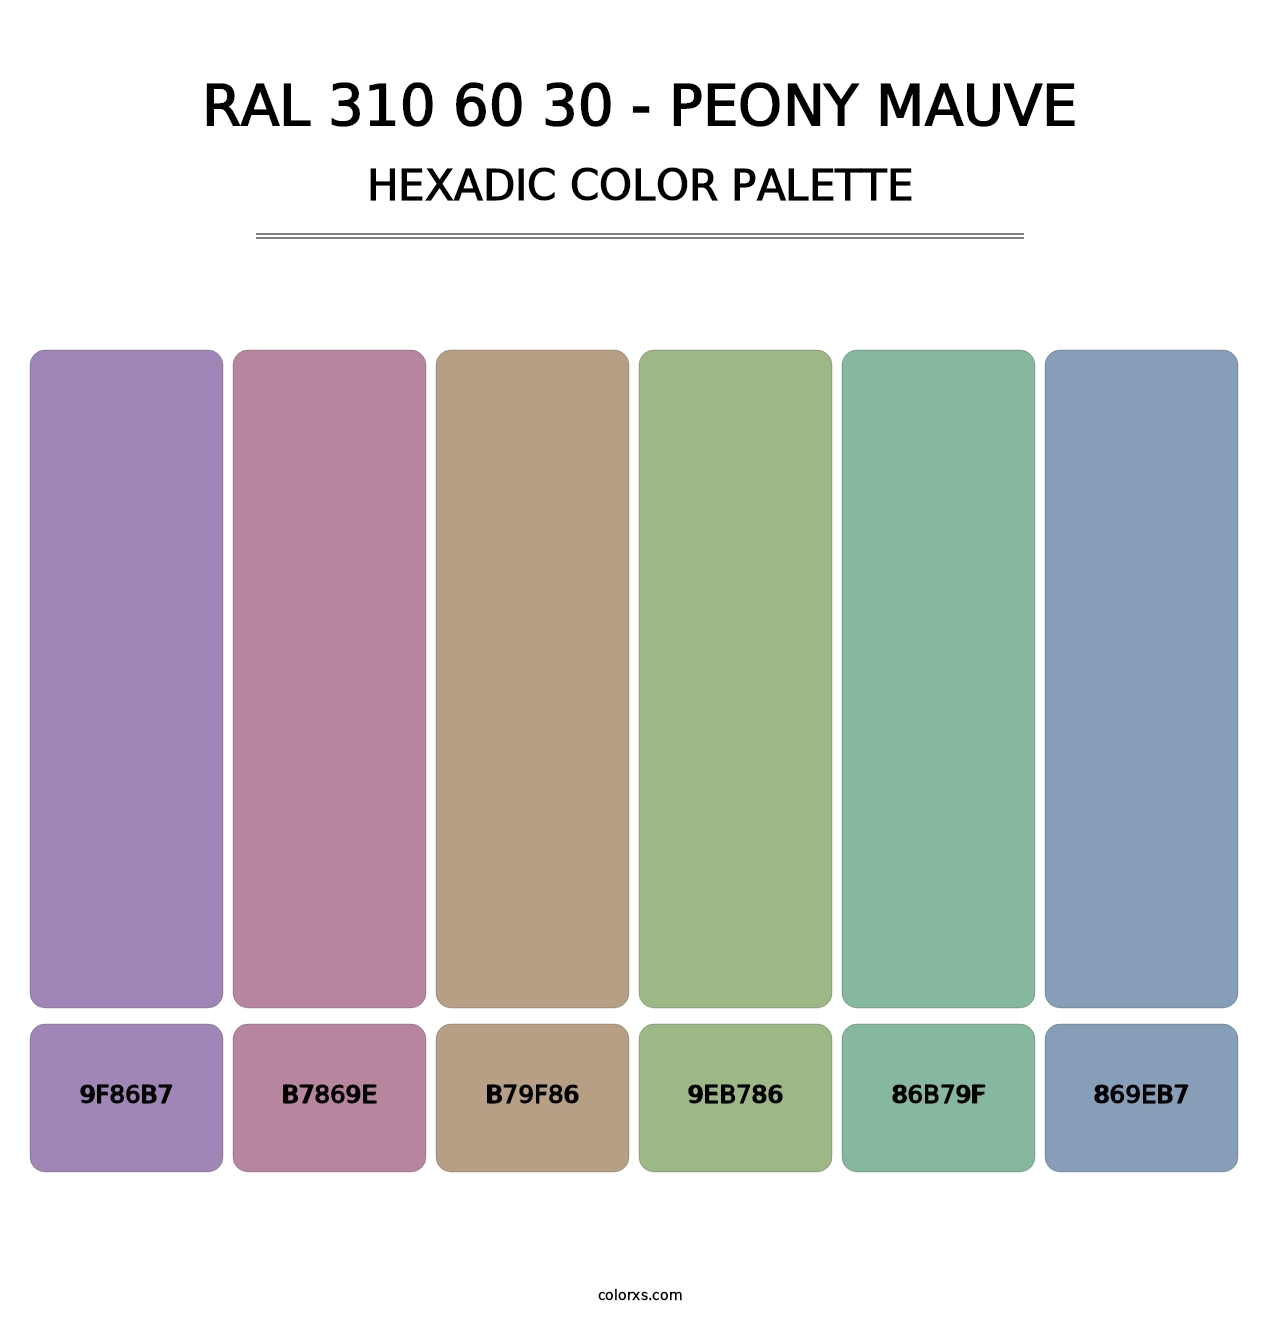 RAL 310 60 30 - Peony Mauve - Hexadic Color Palette